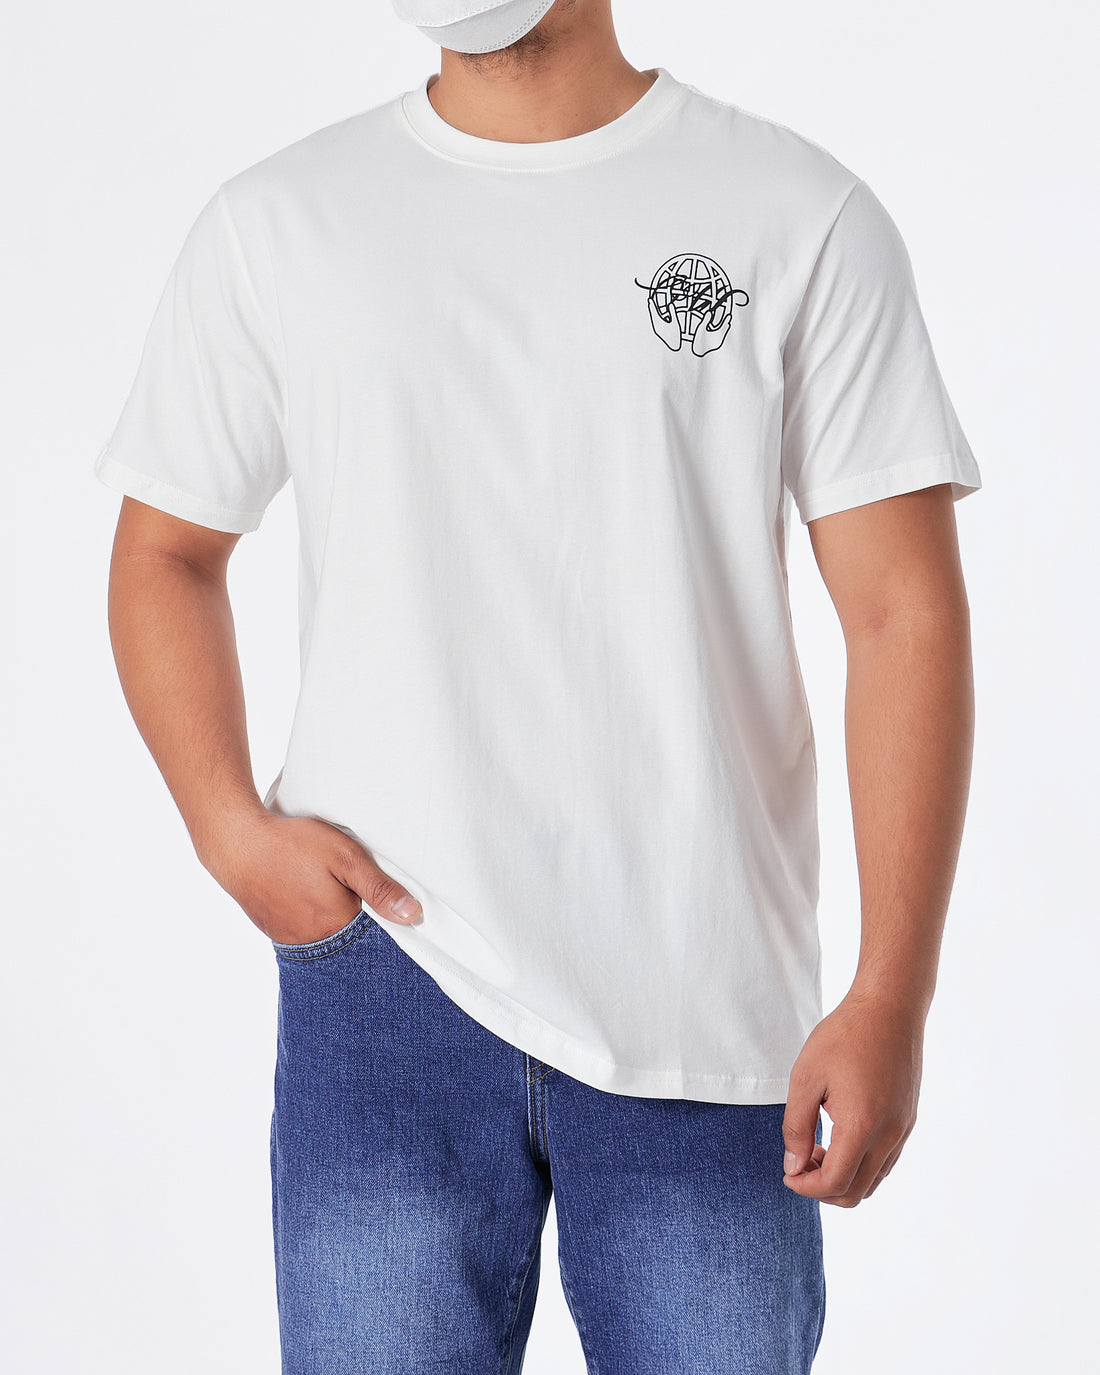 OW Cross Arrow Back Printed Men White T-Shirt 20.90